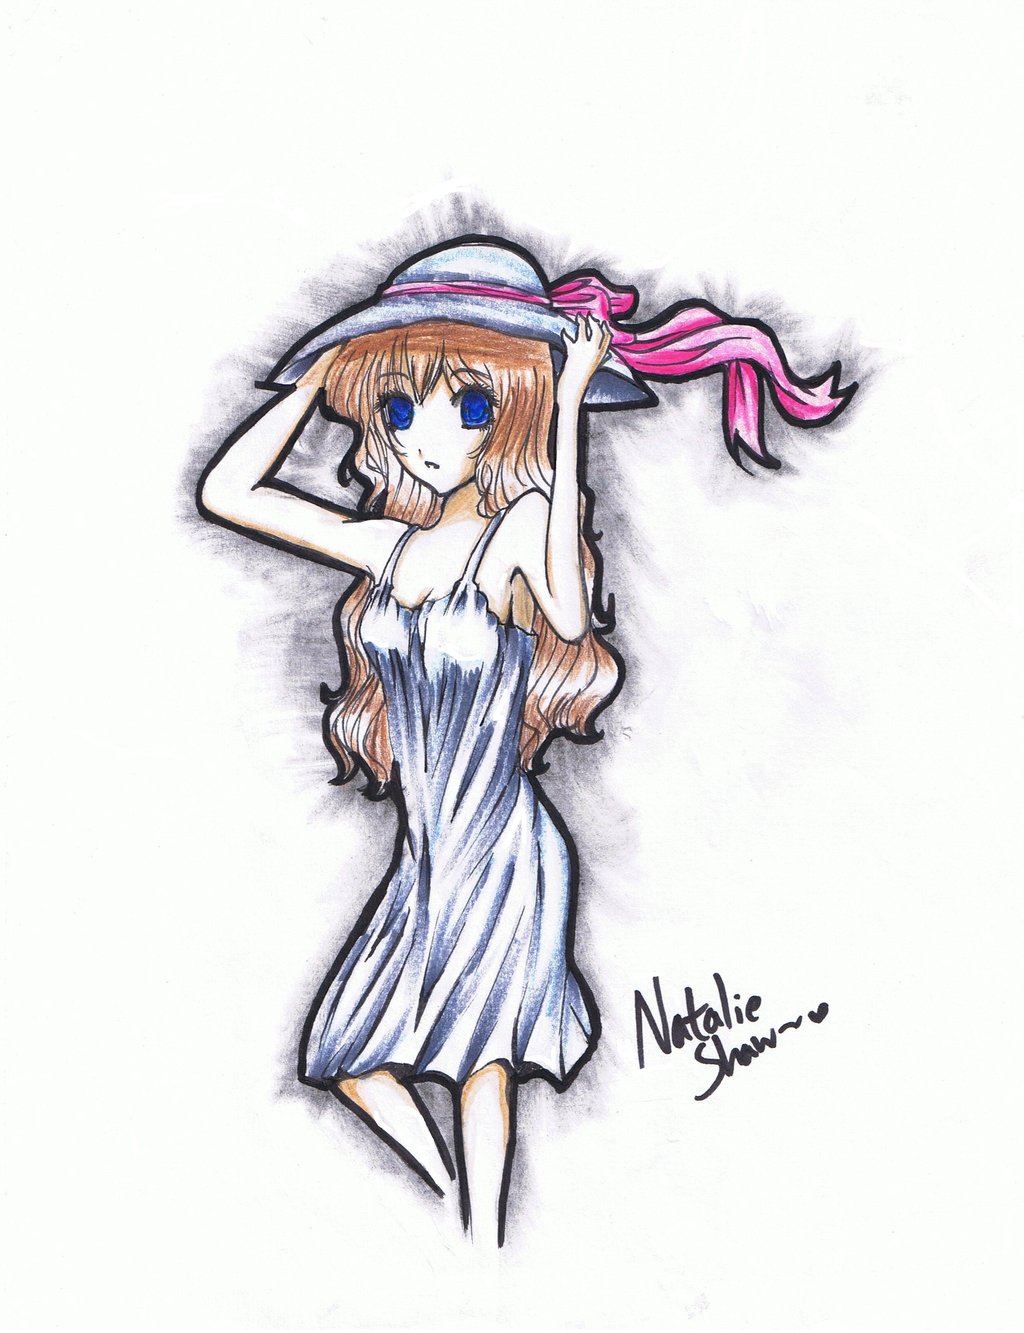 White Dress by Nyra992